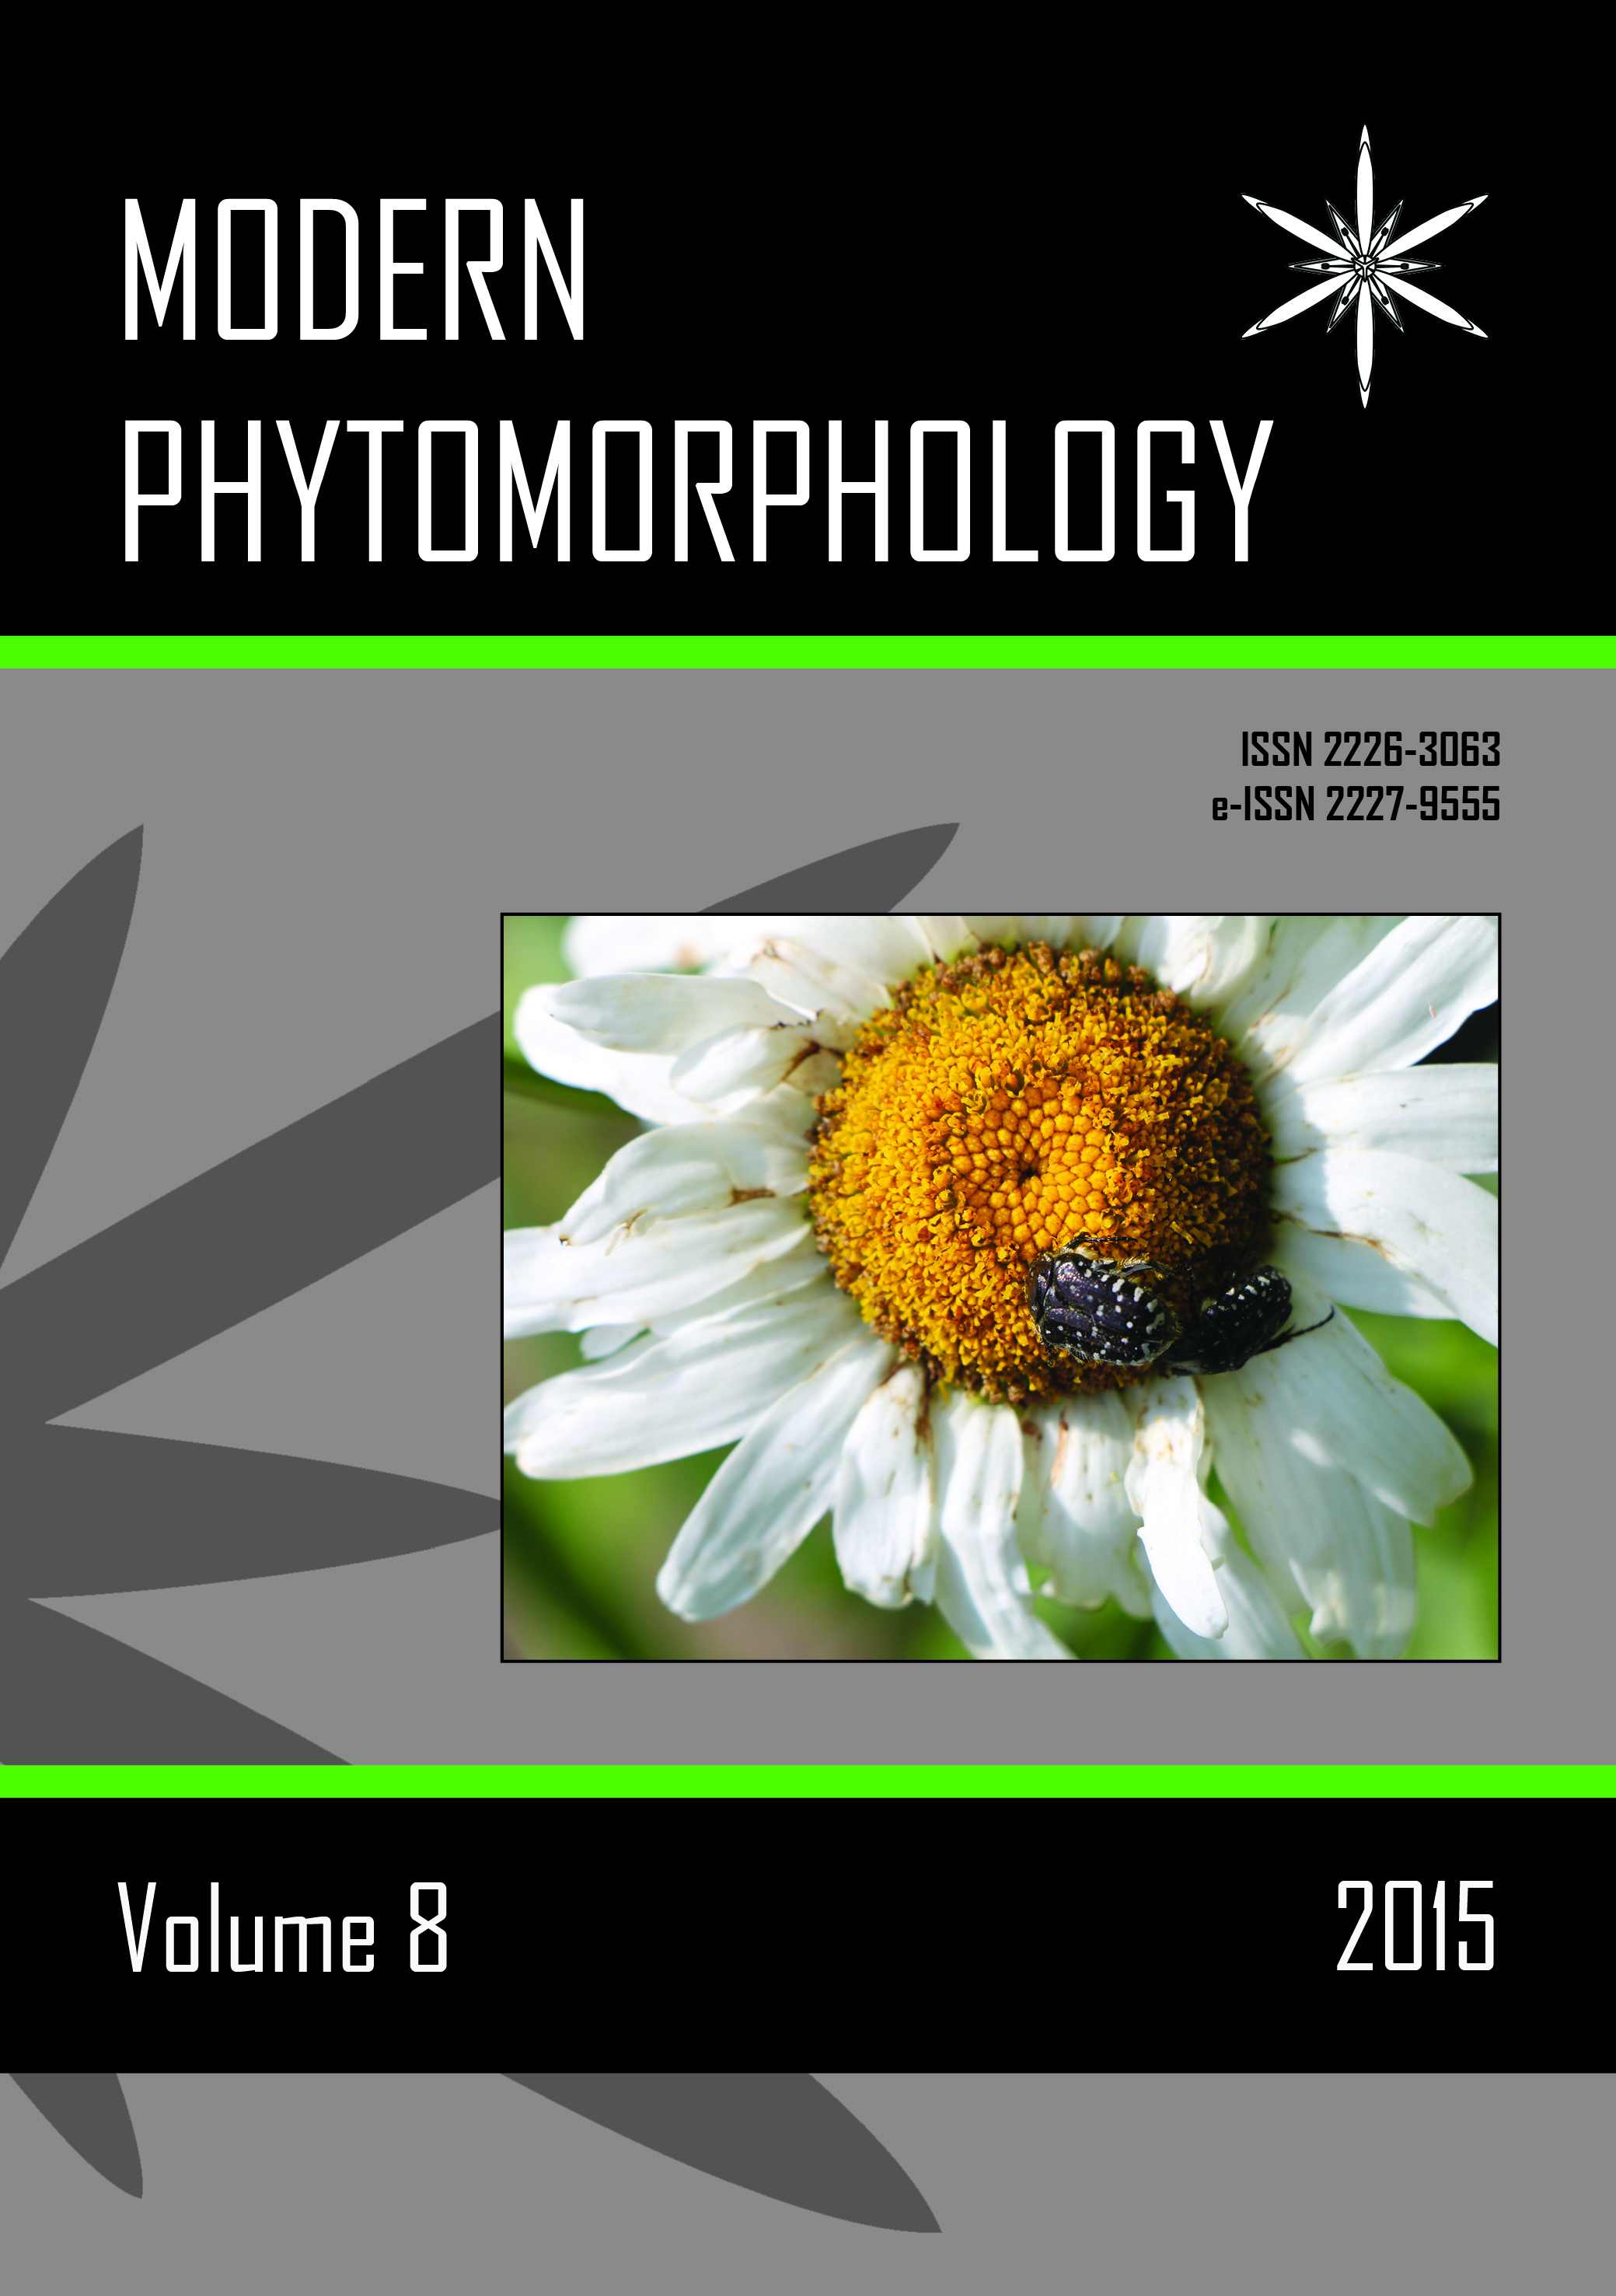 Modern Phytomorphology cover, Vol. 8